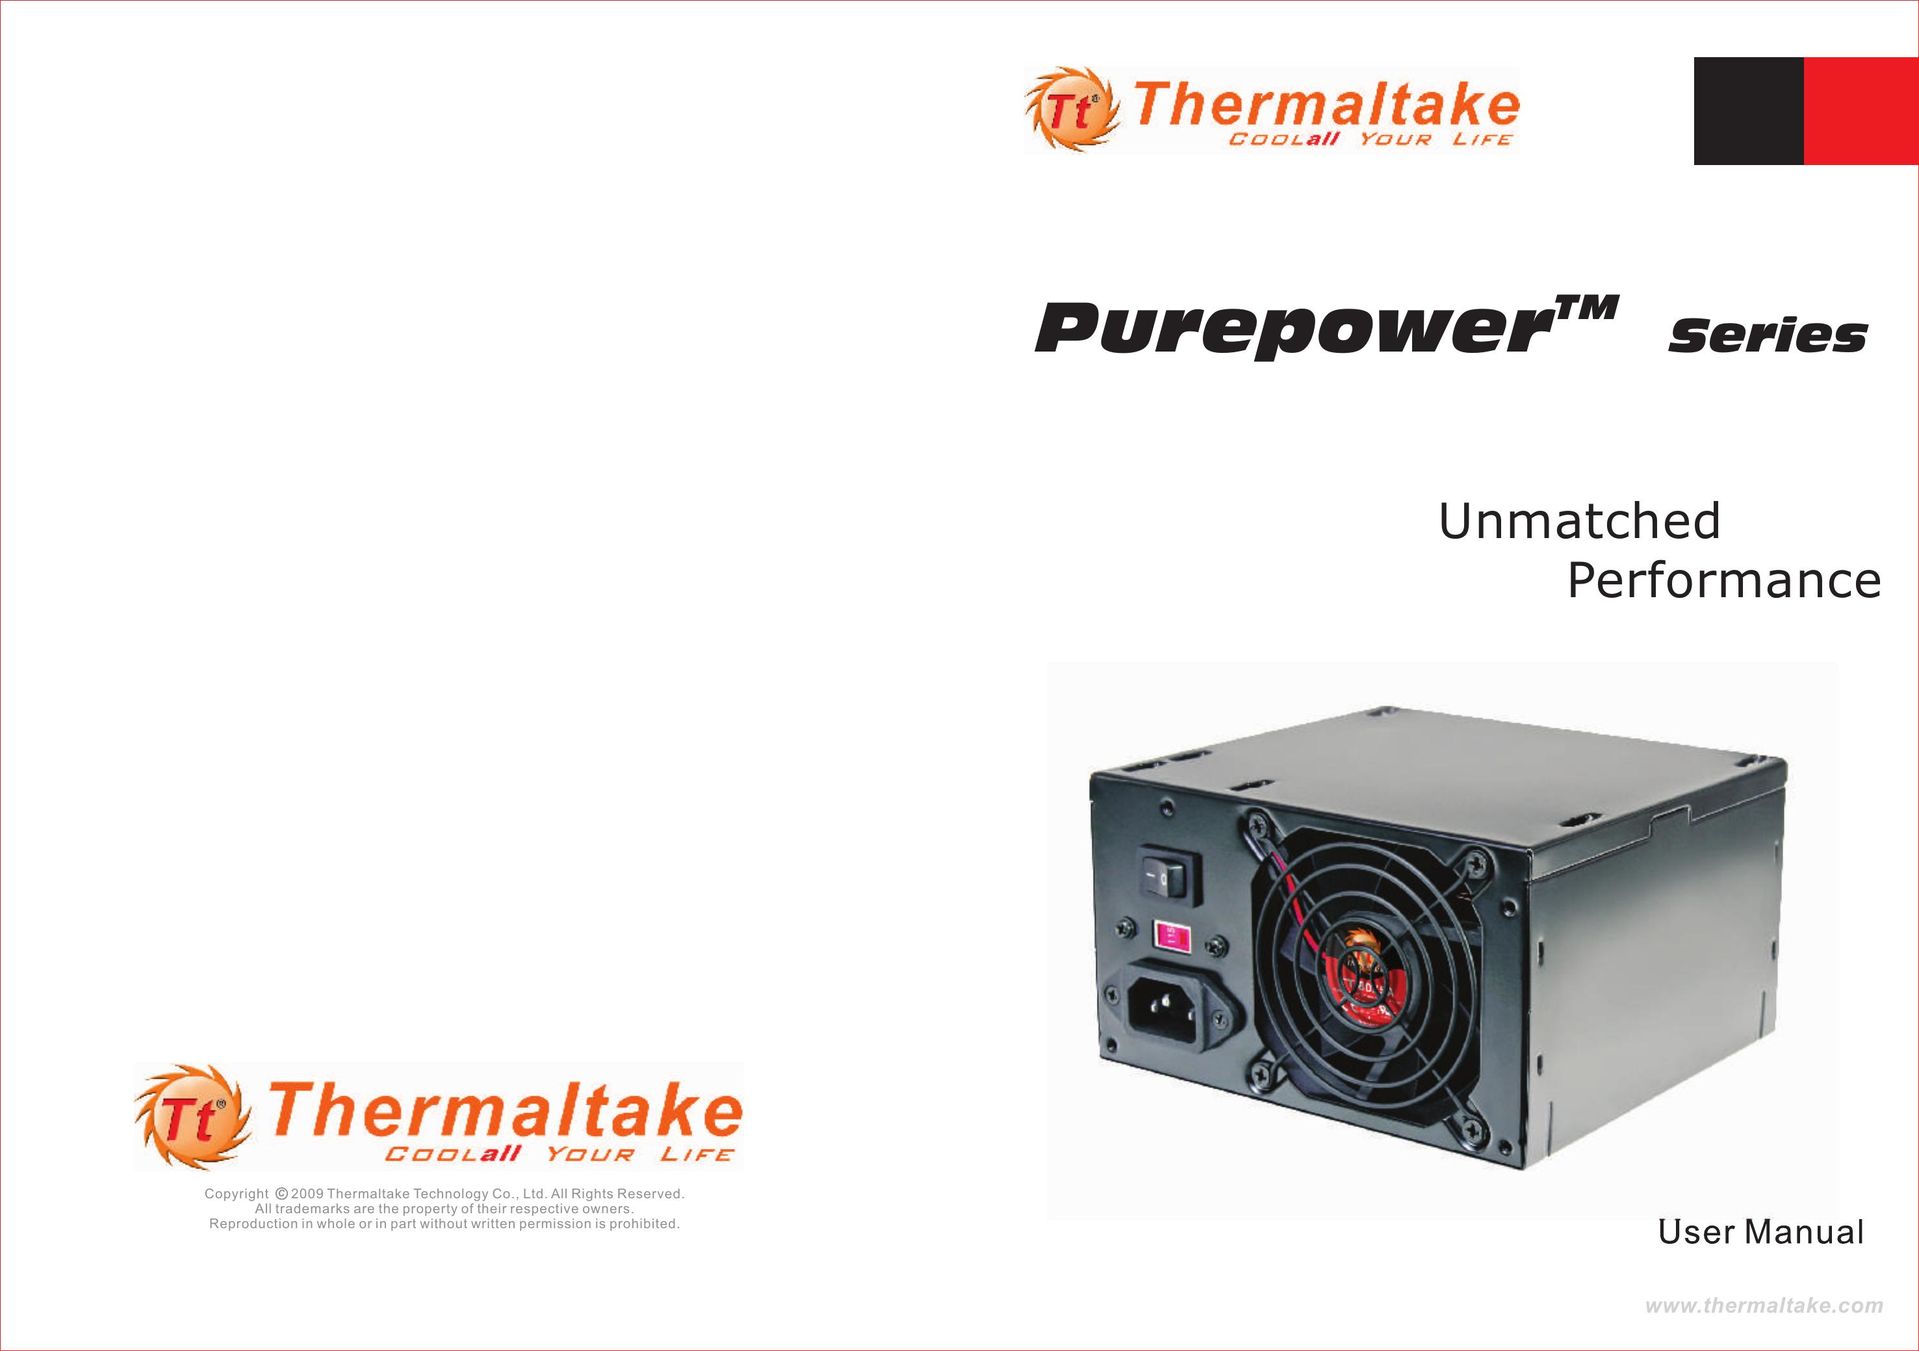 Thermaltake 450W Power Supply User Manual